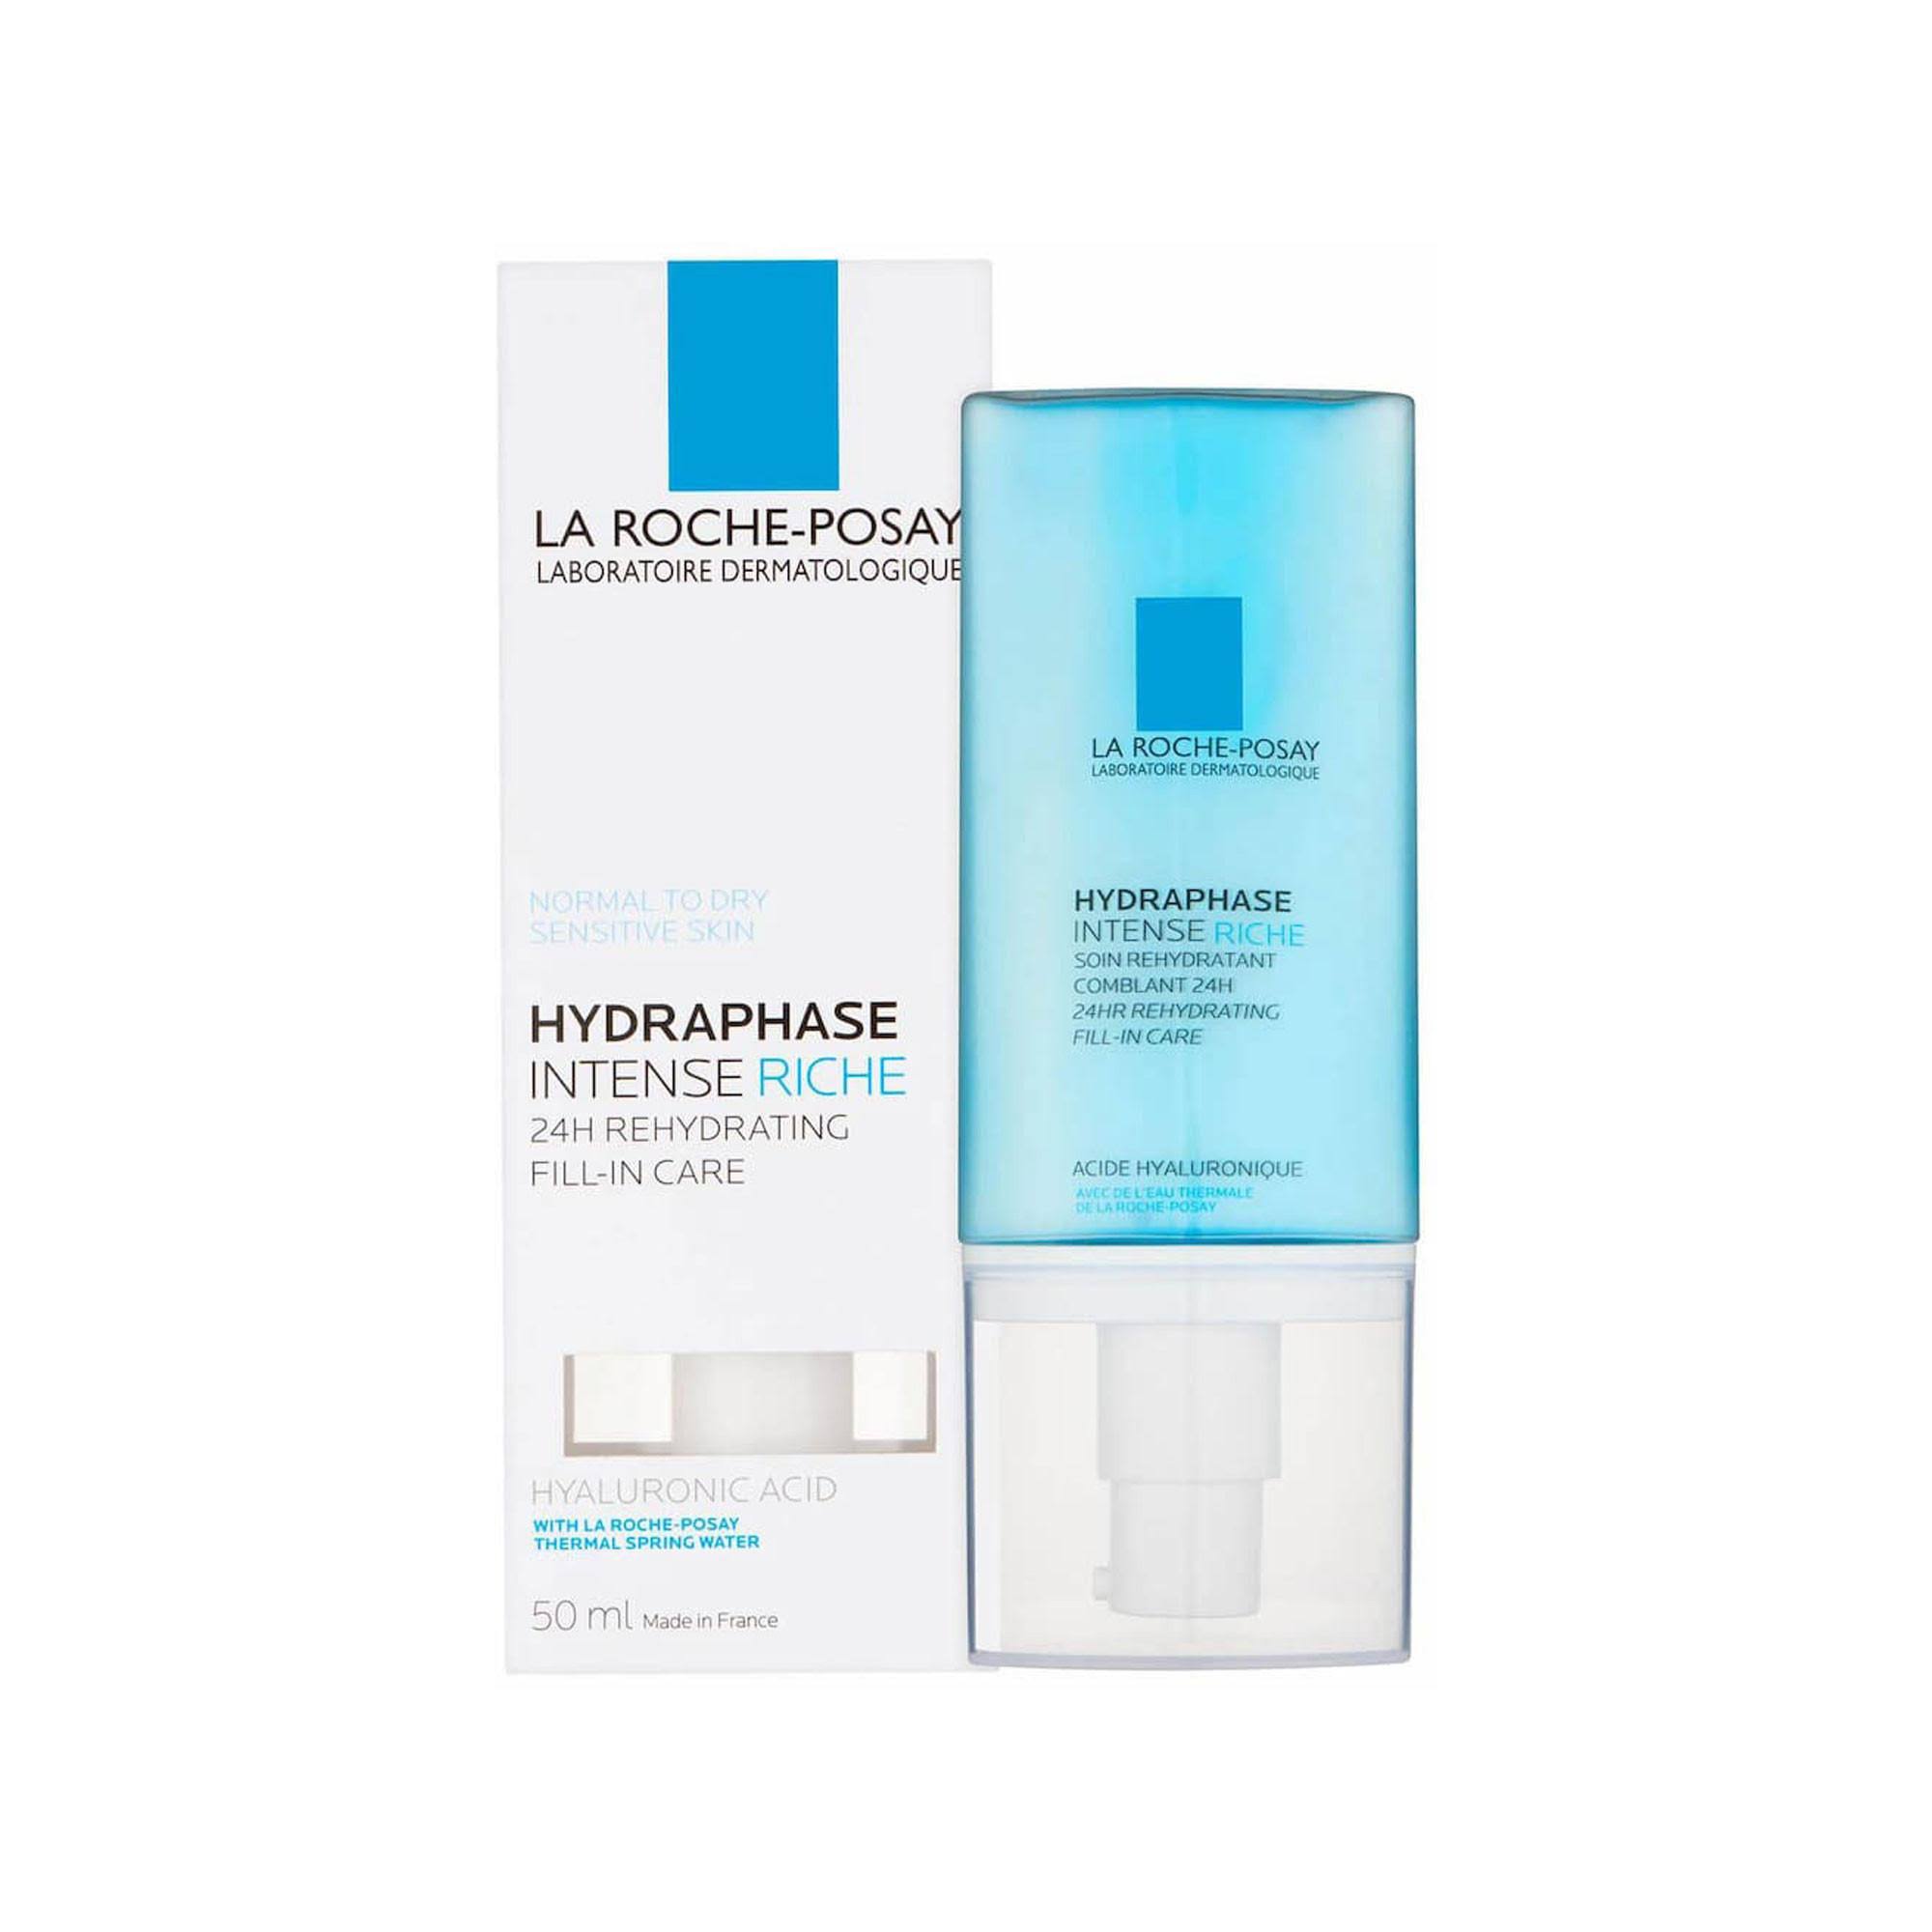 La Roche-Posay Hydraphase Intense Riche Skin Treatment - 1.69 oz bottle